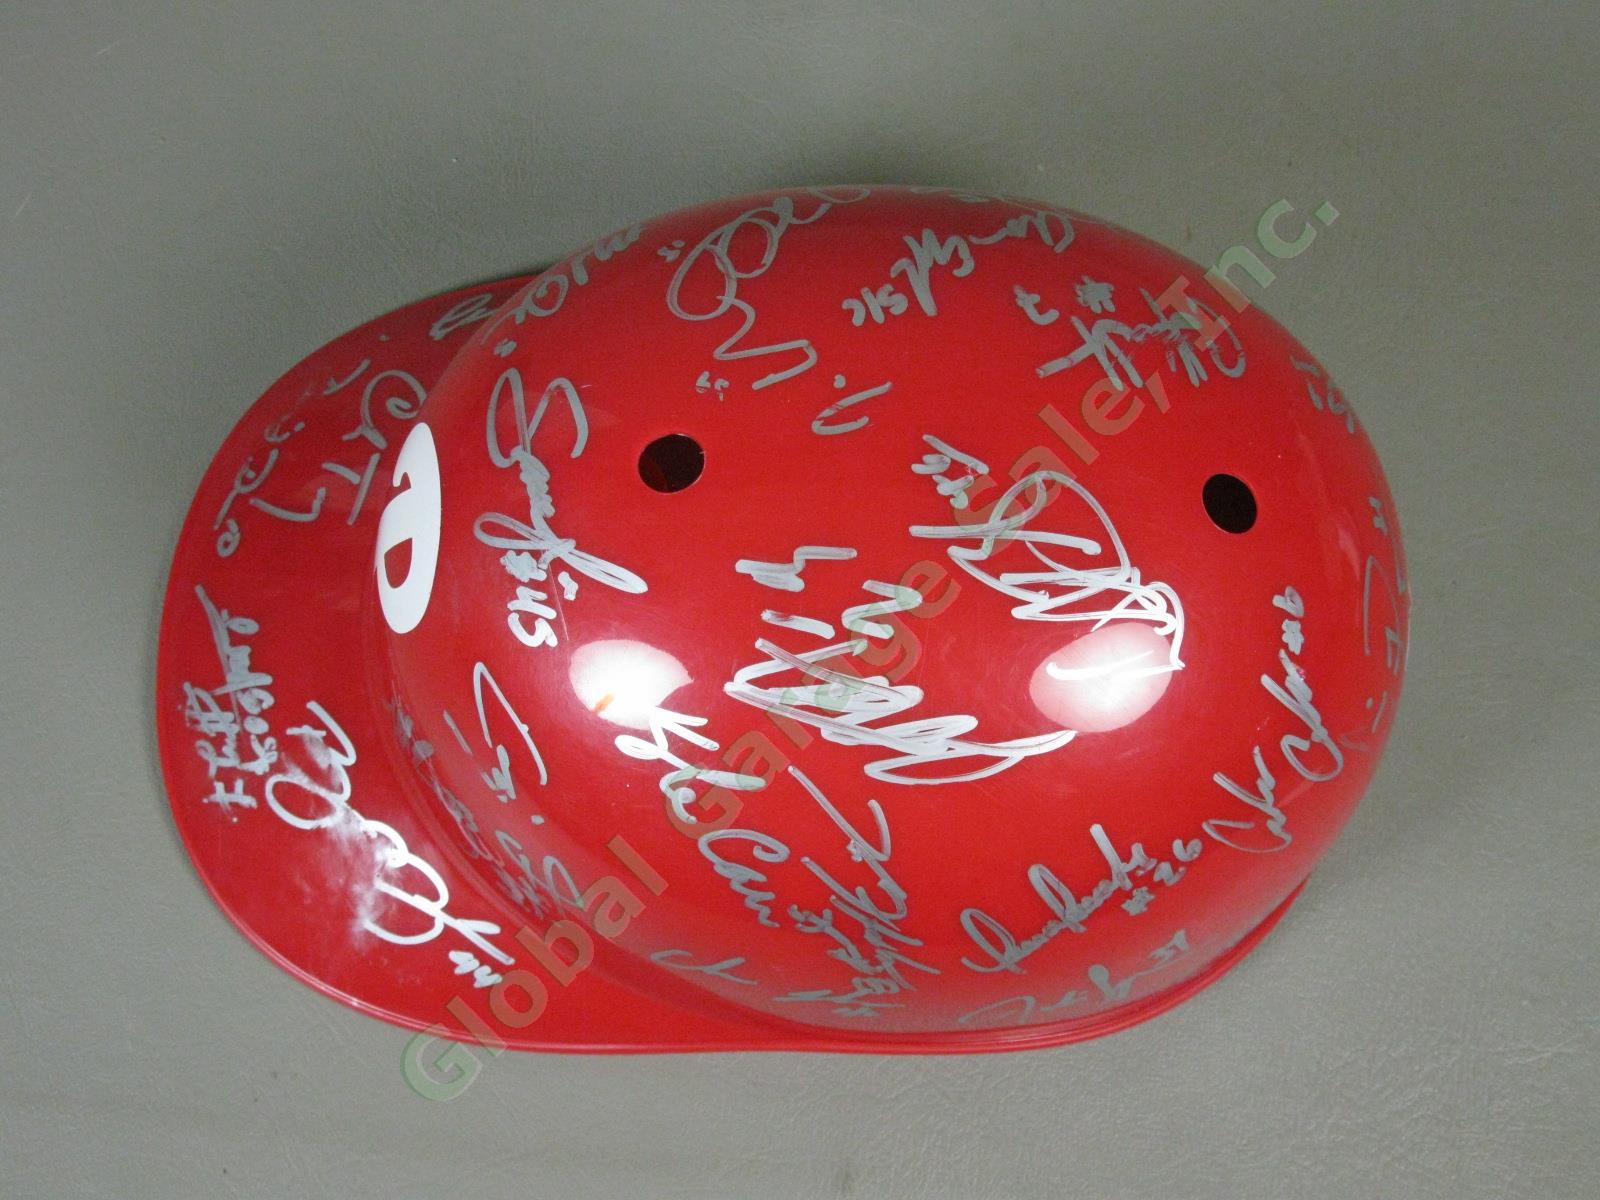 2010 Williamsport Crosscutters Team Signed Baseball Helmet Philadelphia Phillies 4